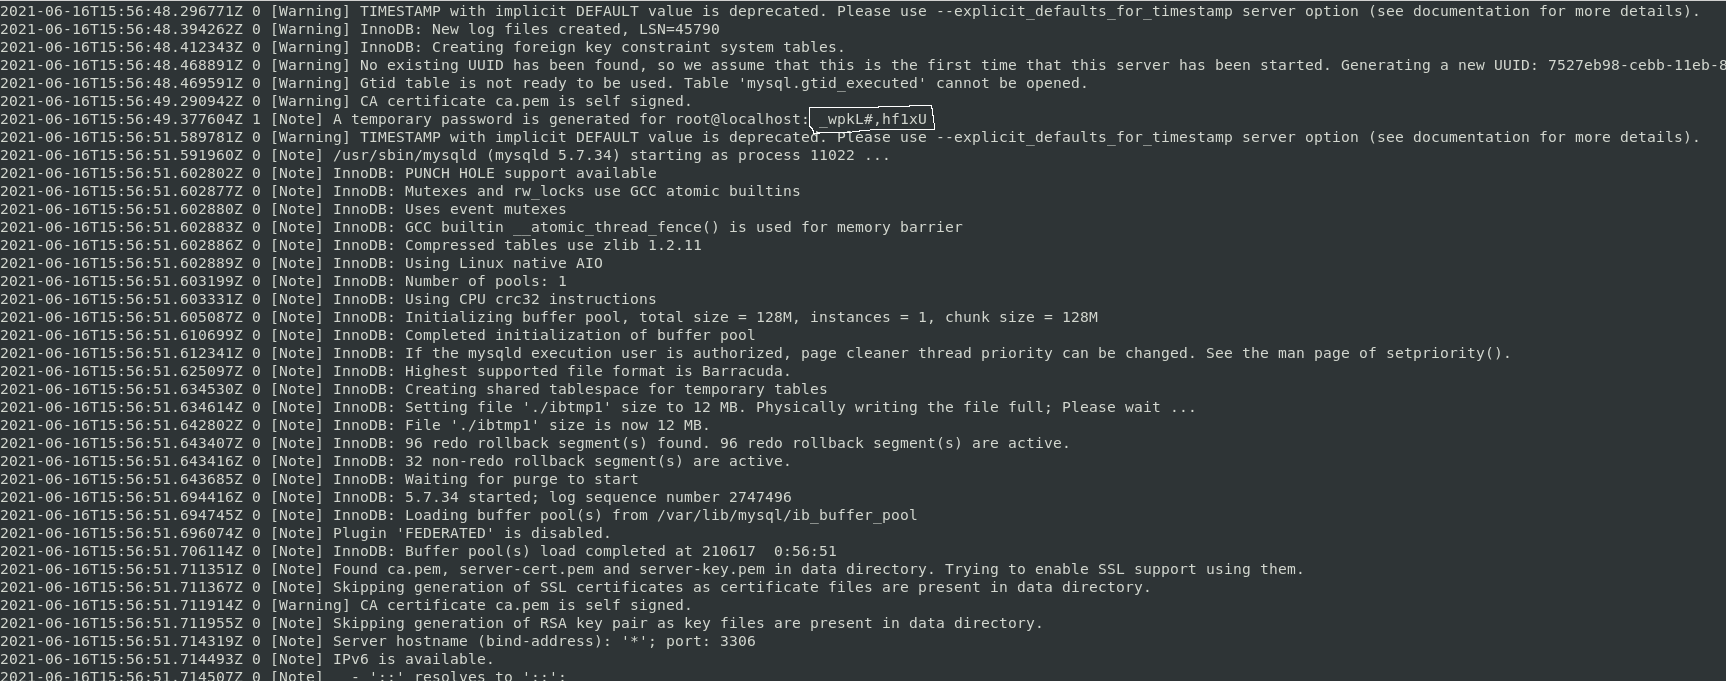 error 1045 (28000): access denied for user 